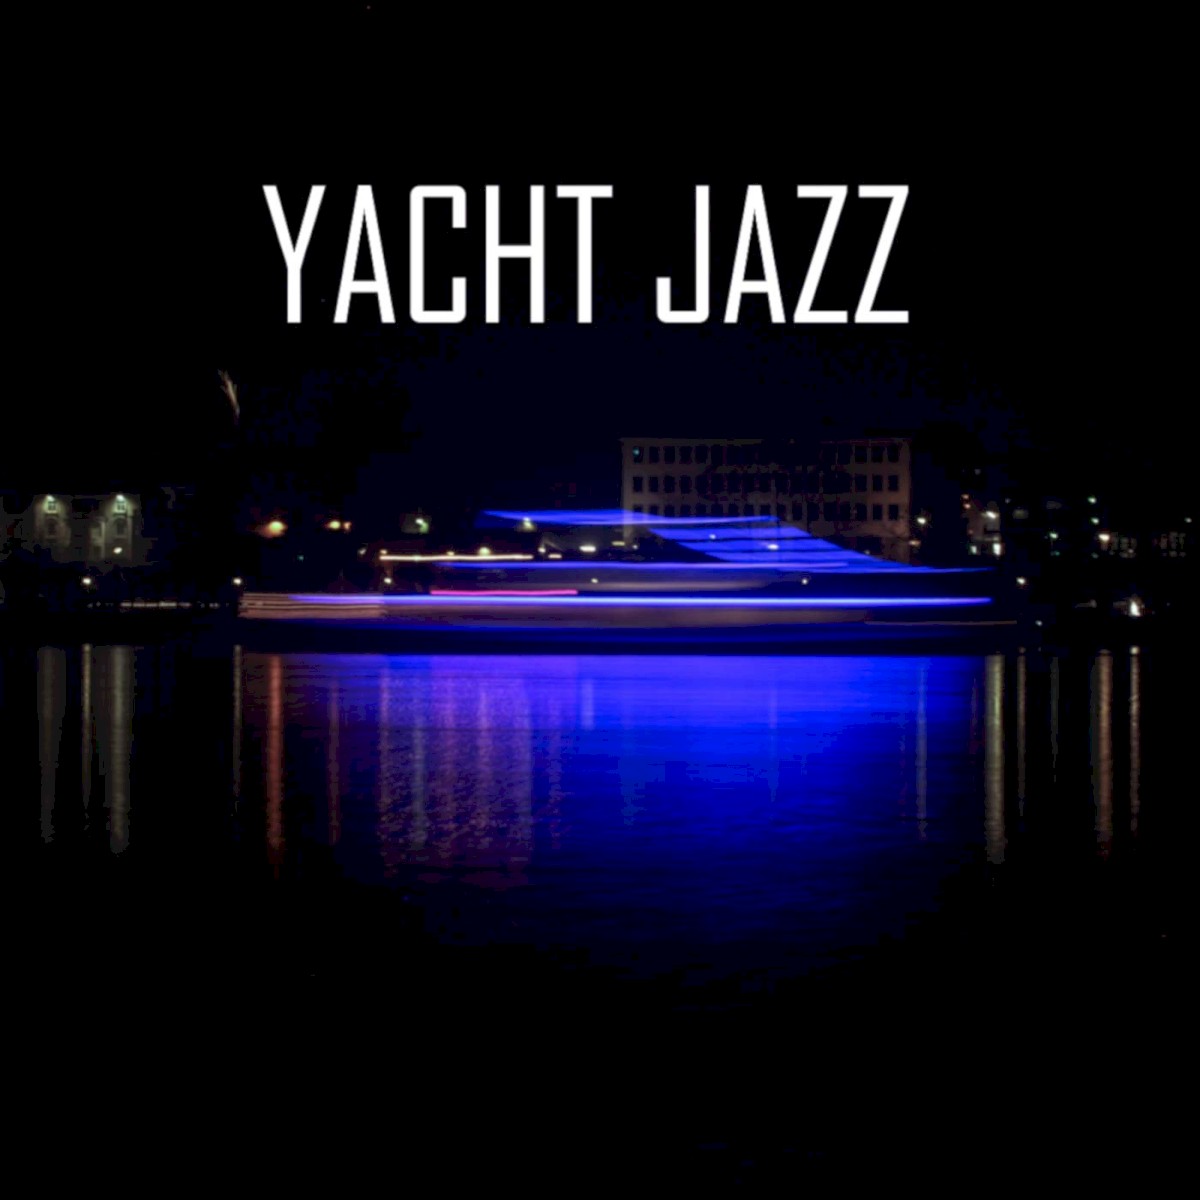 yacht jazz music